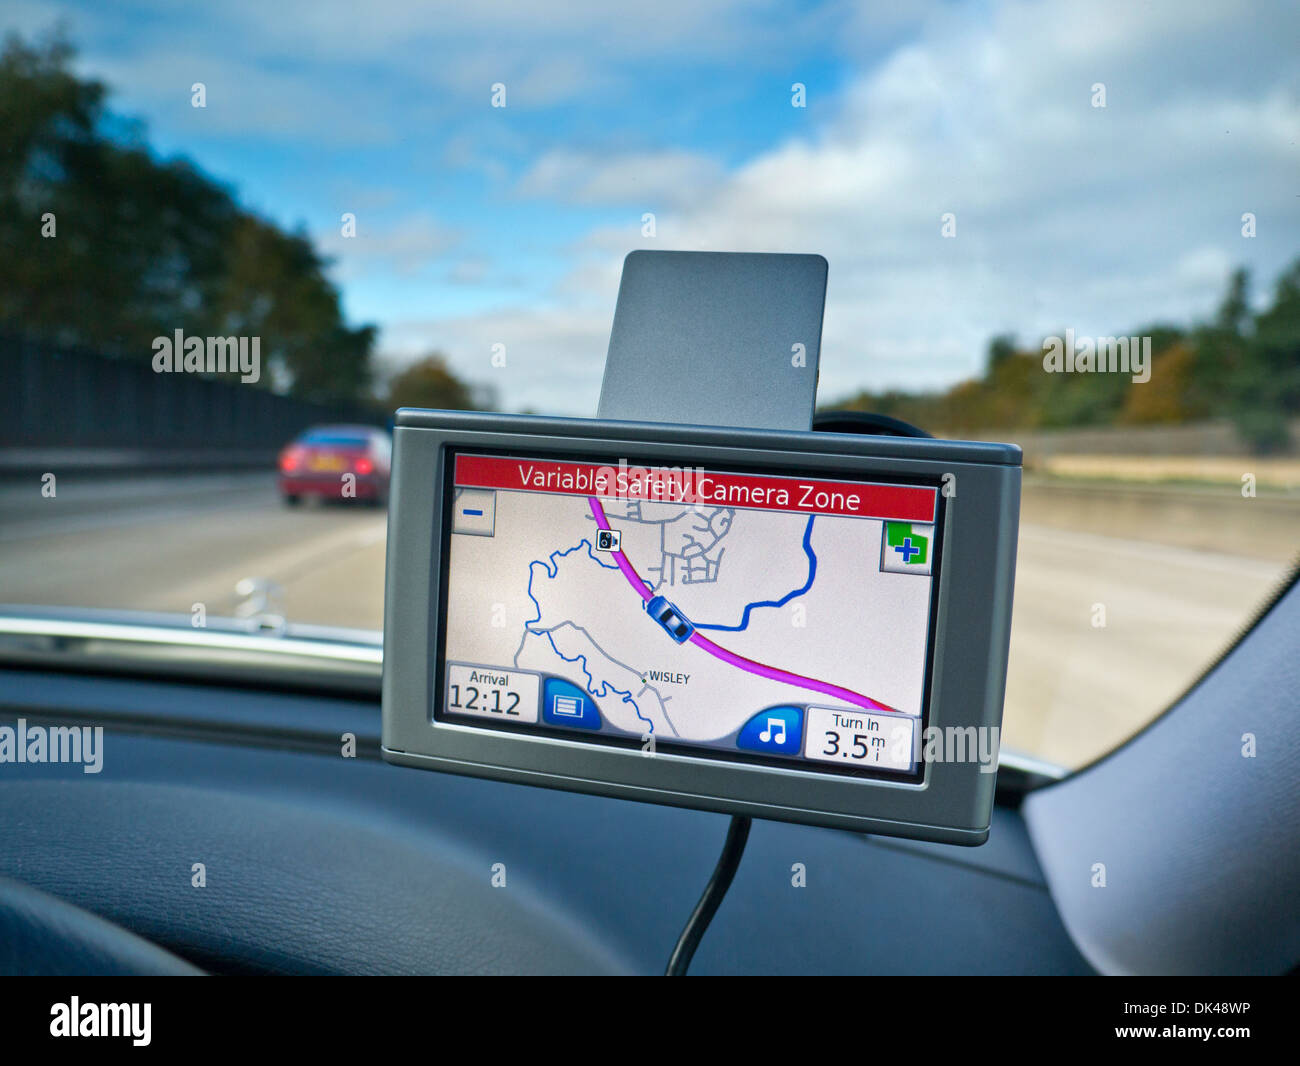 Car Satellite Navigation screen on M25 Orbital motorway with red 'Variable Safety Camera Zone' alert displayed Surrey UK Stock Photo